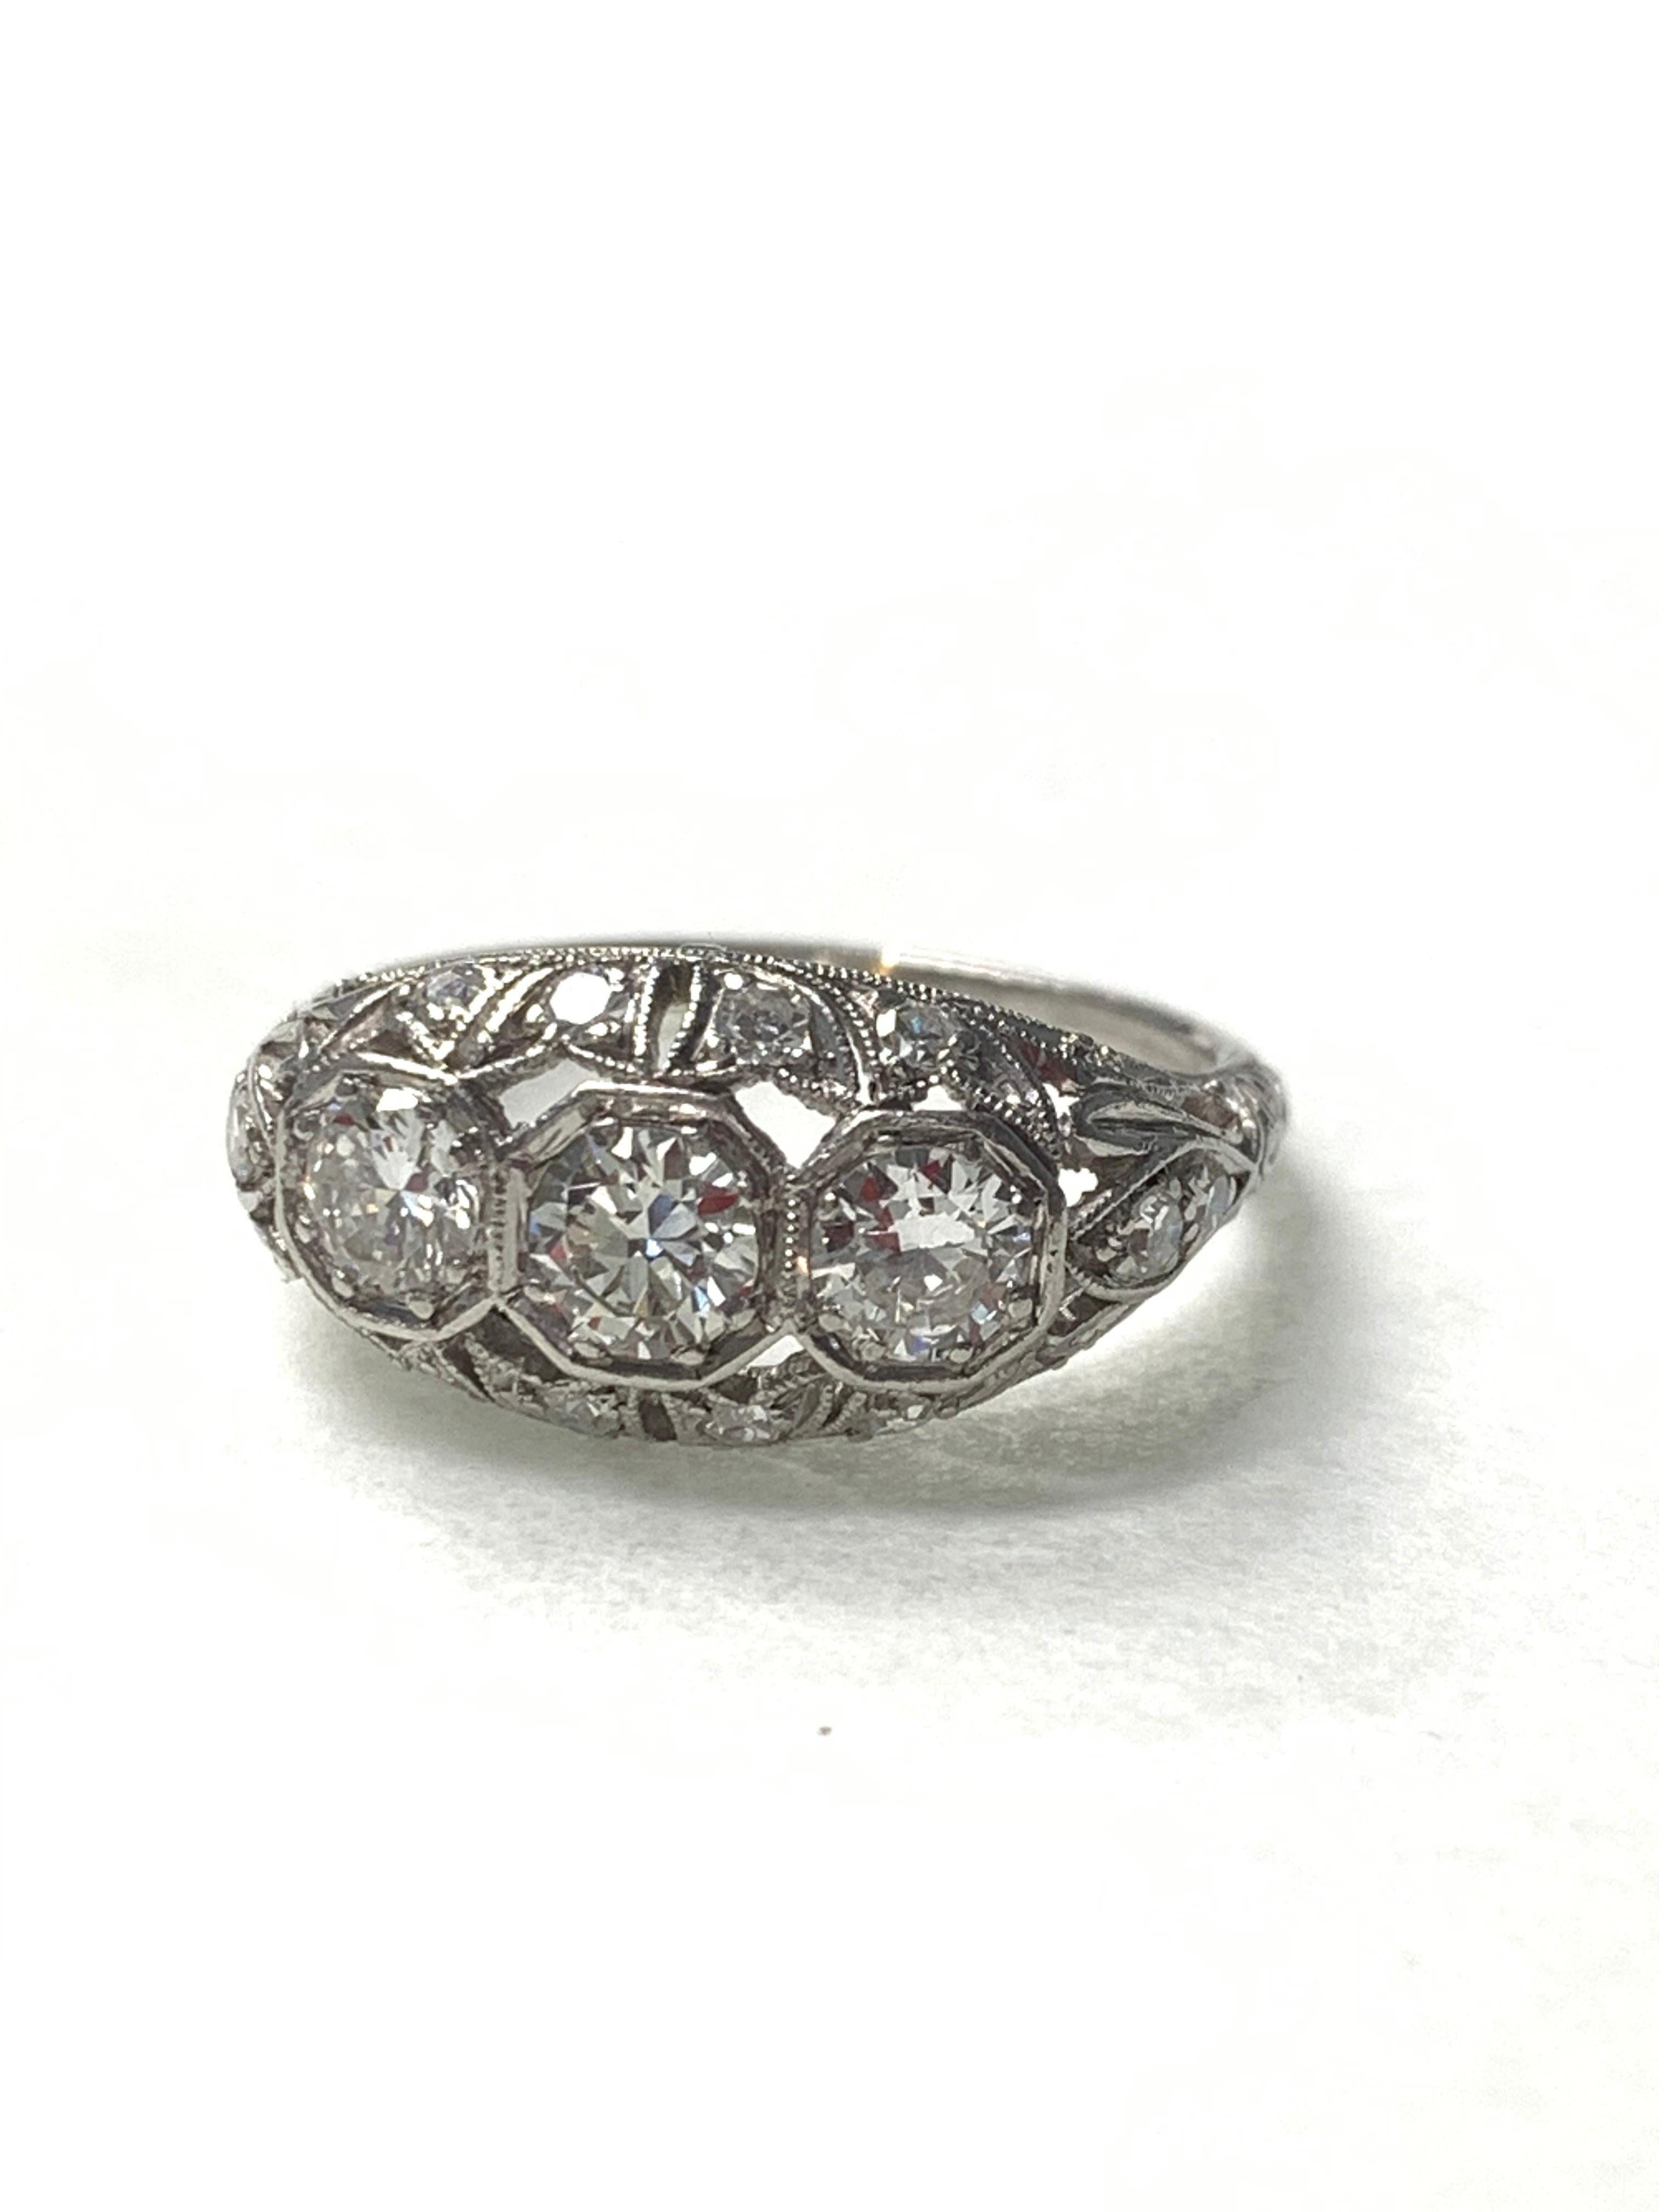 Women's 1920 Antique Three-Stone Old European Cut Diamond Ring in Platinum For Sale